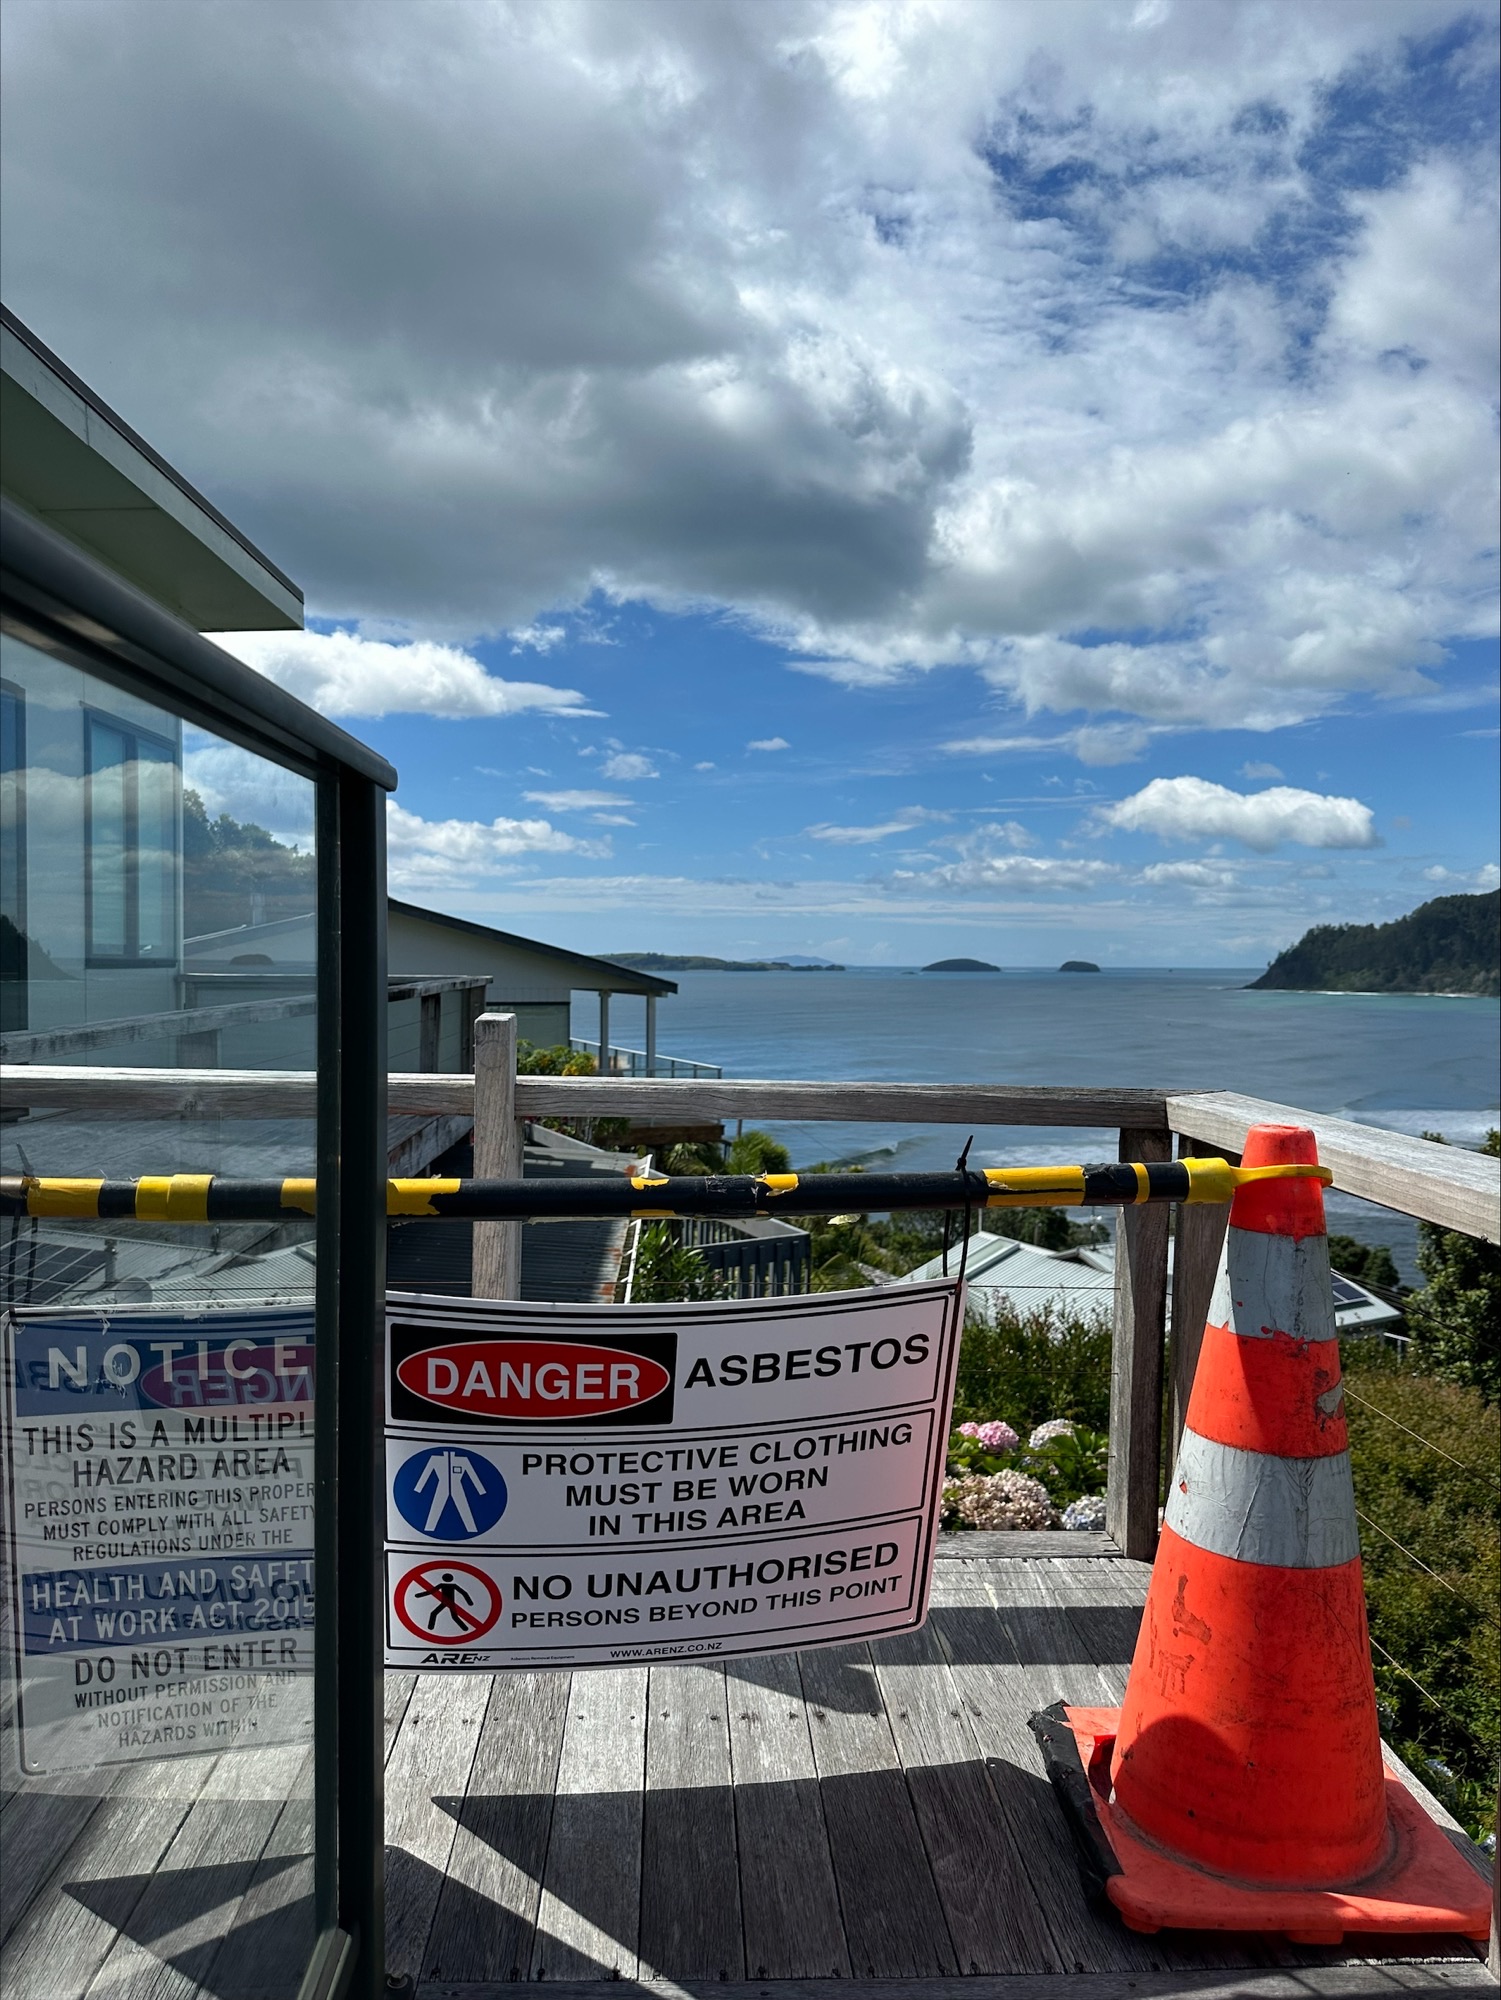 Asbestos warning signs at a residential property